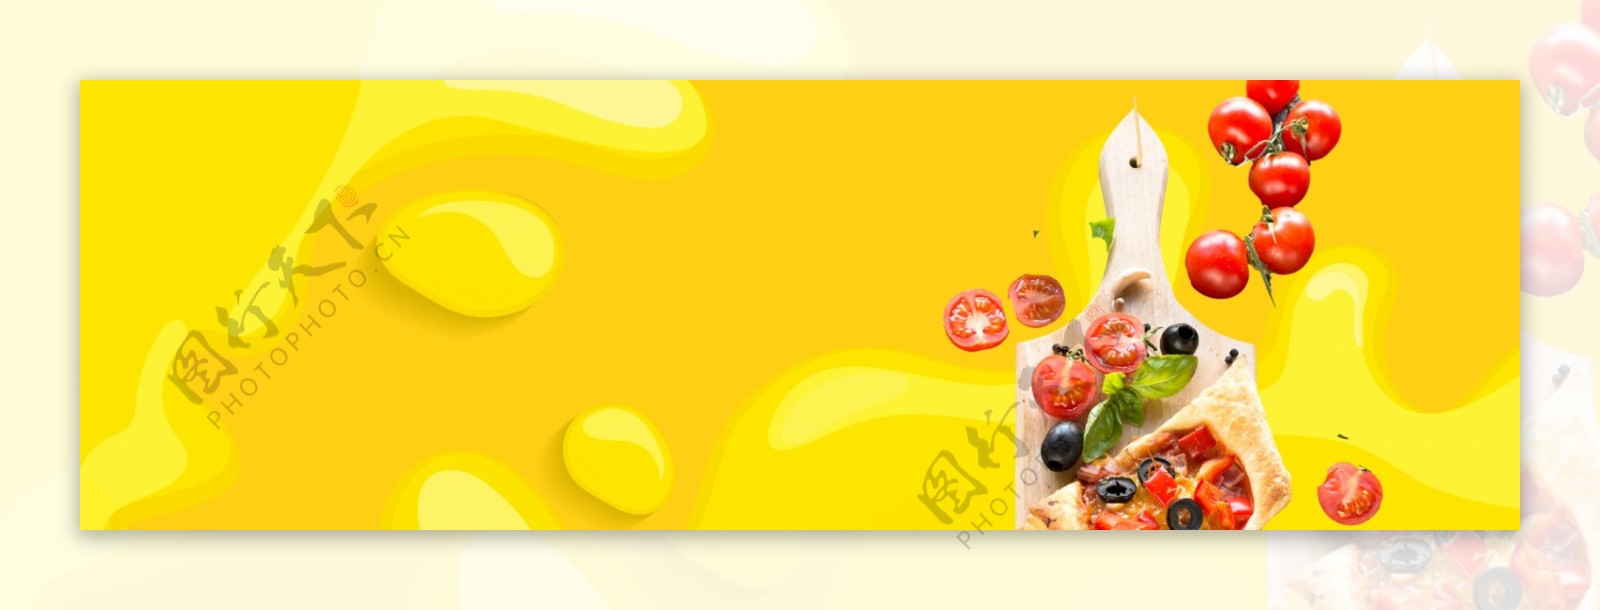 黄色柠檬鲜艳水果banner背景